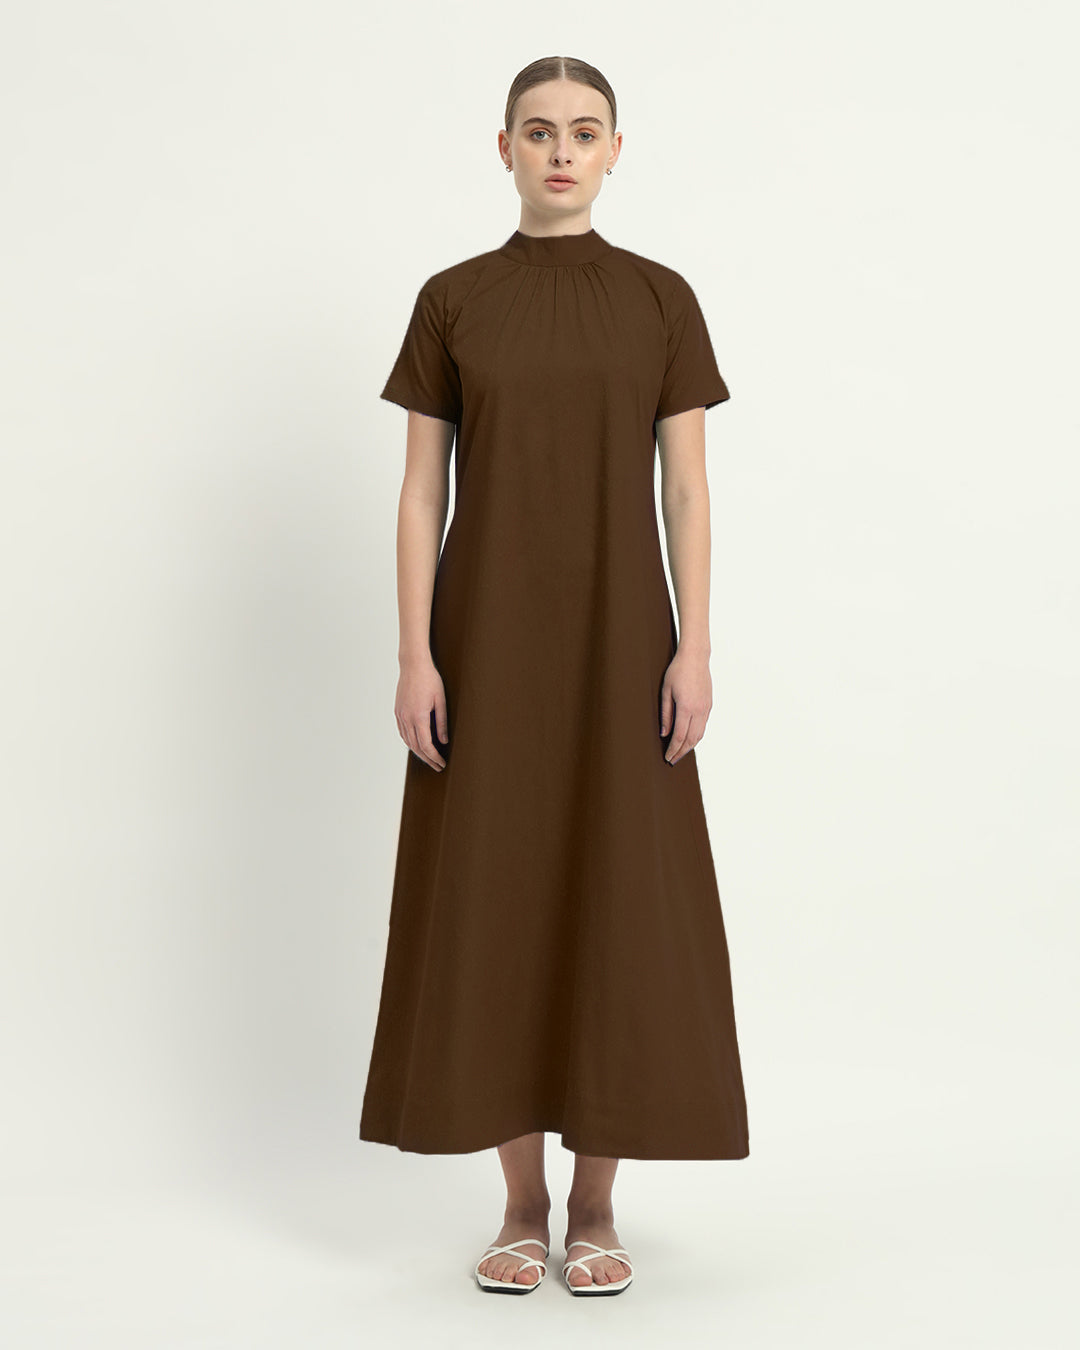 The Nutshell Hermon Cotton Dress